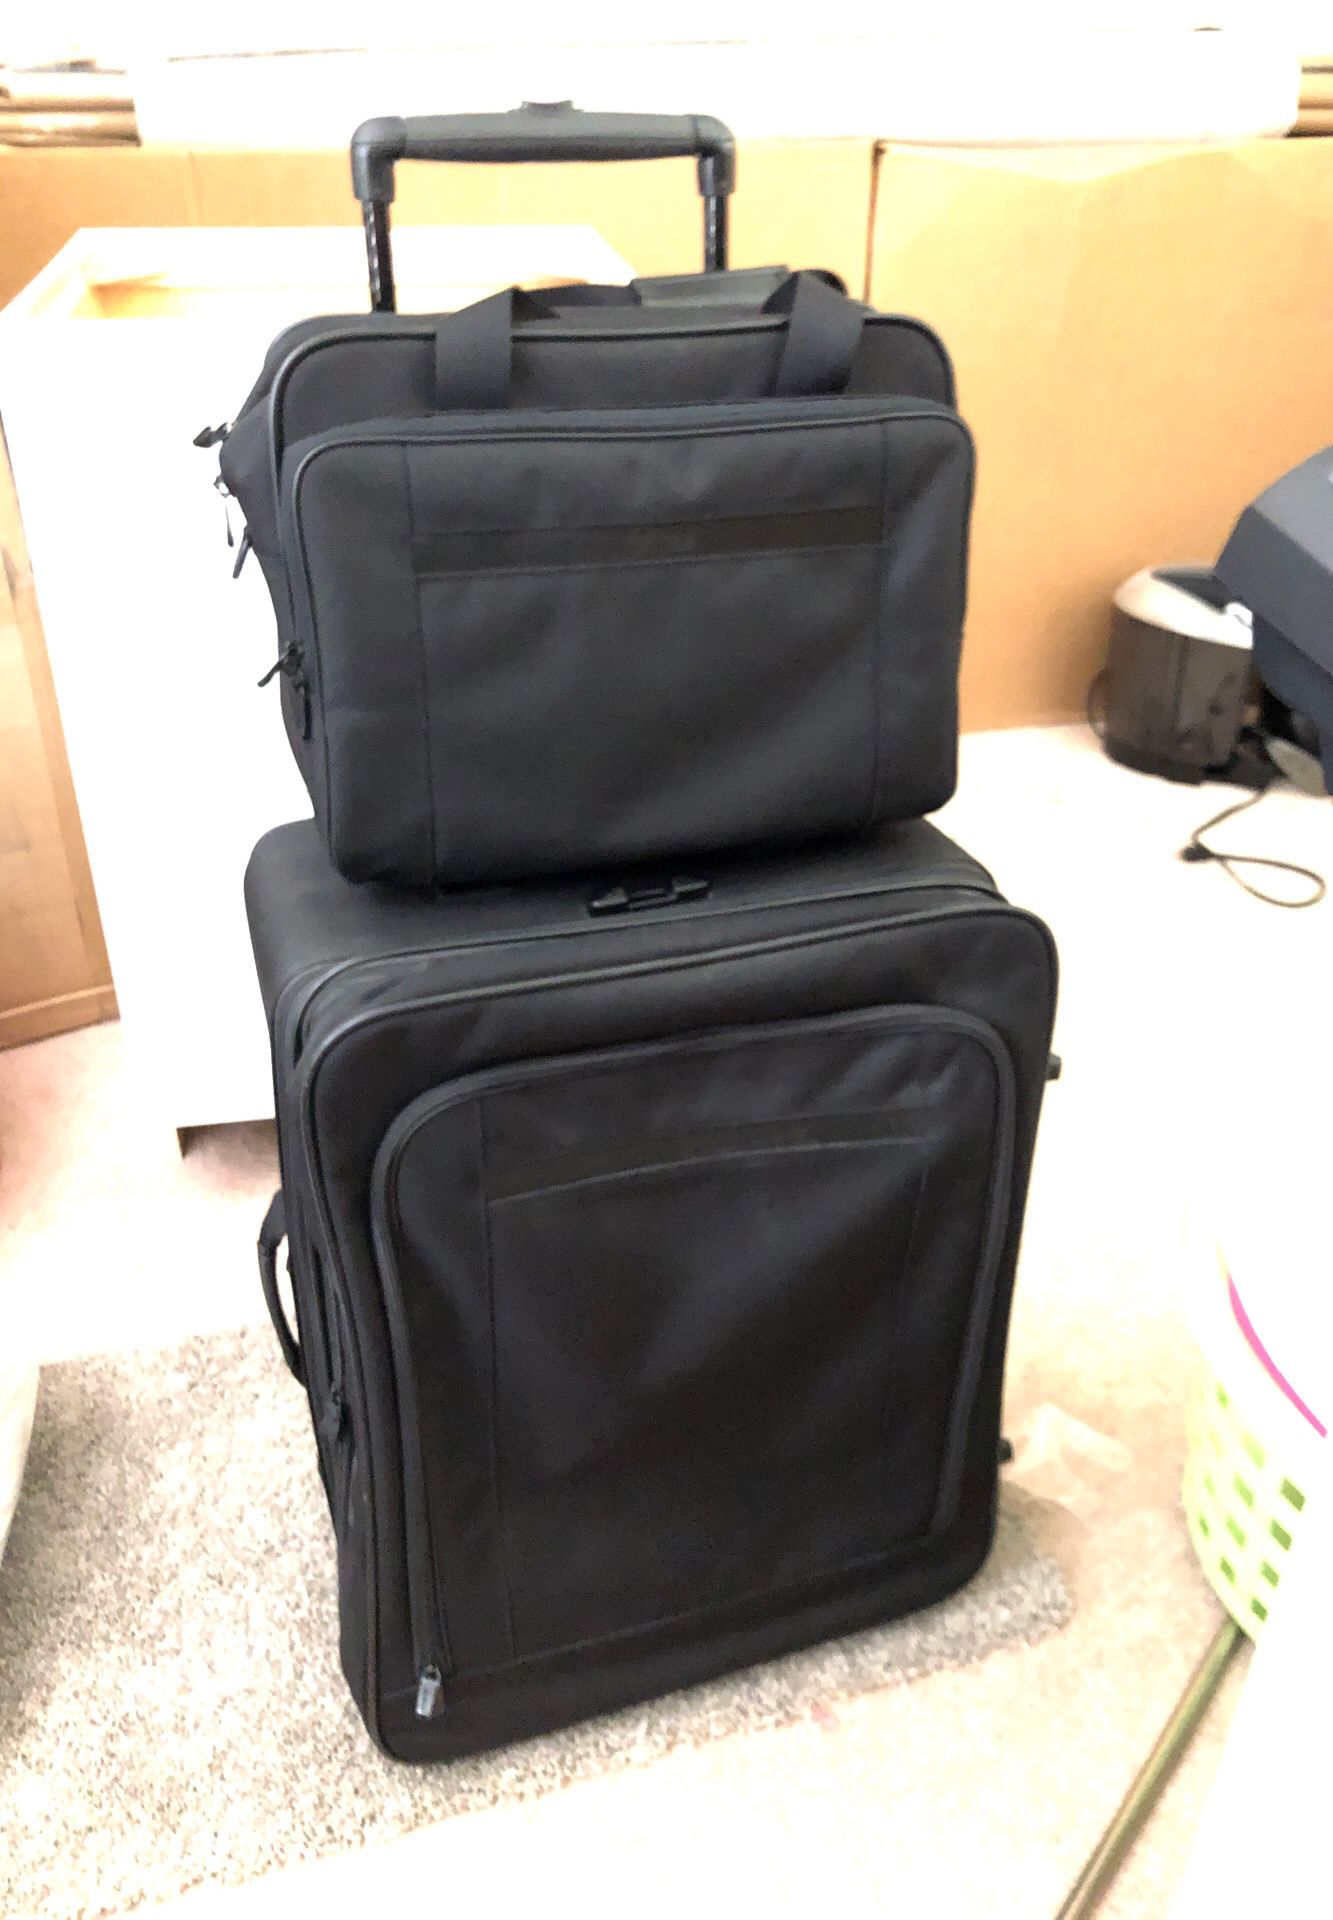 Hartman luggage with garment bag